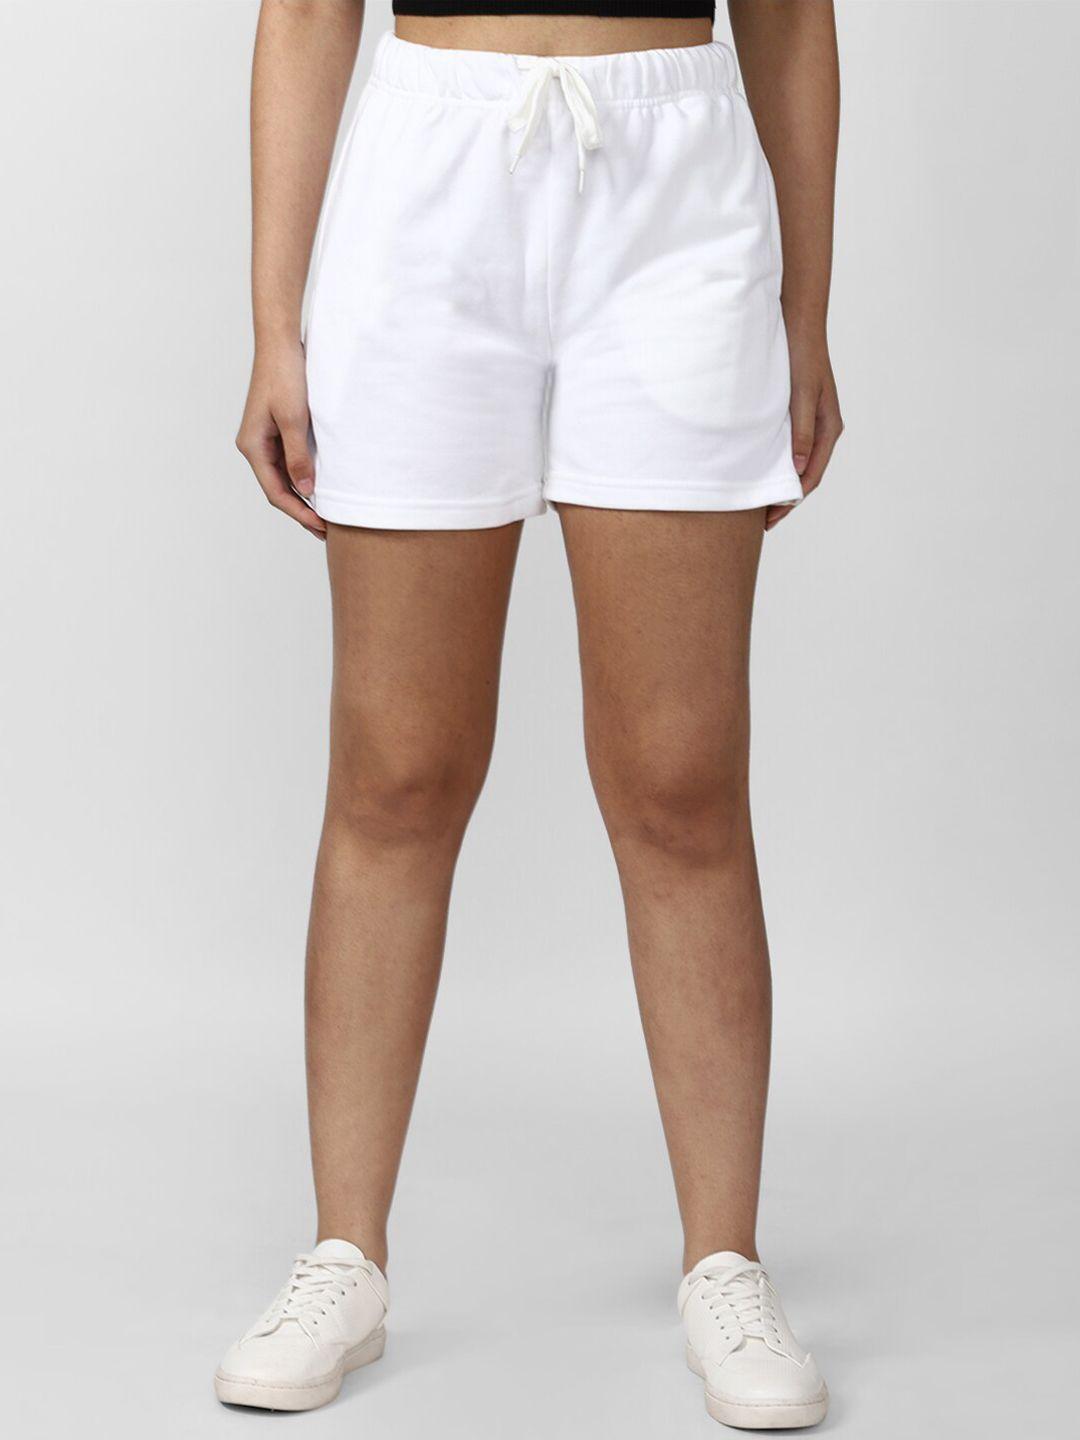 FOREVER 21 Women White Solid Shorts